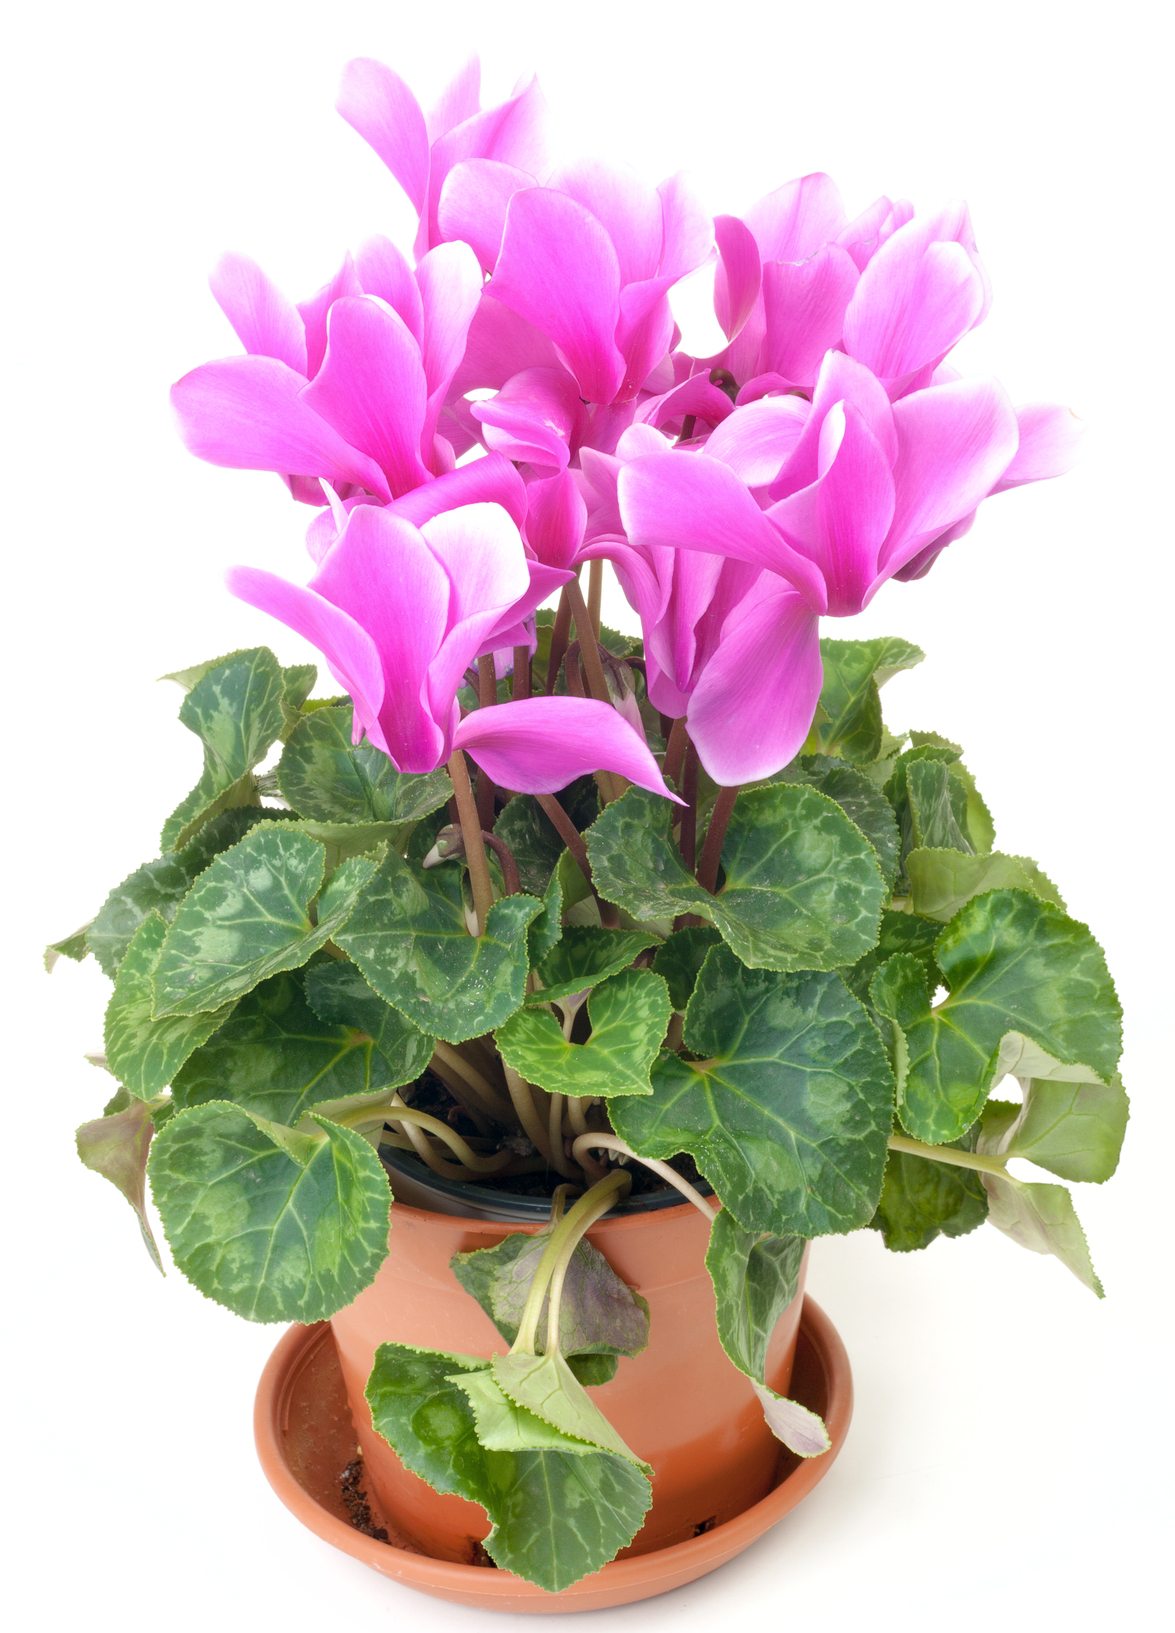 Комнатный цветок с розовыми цветами название фото